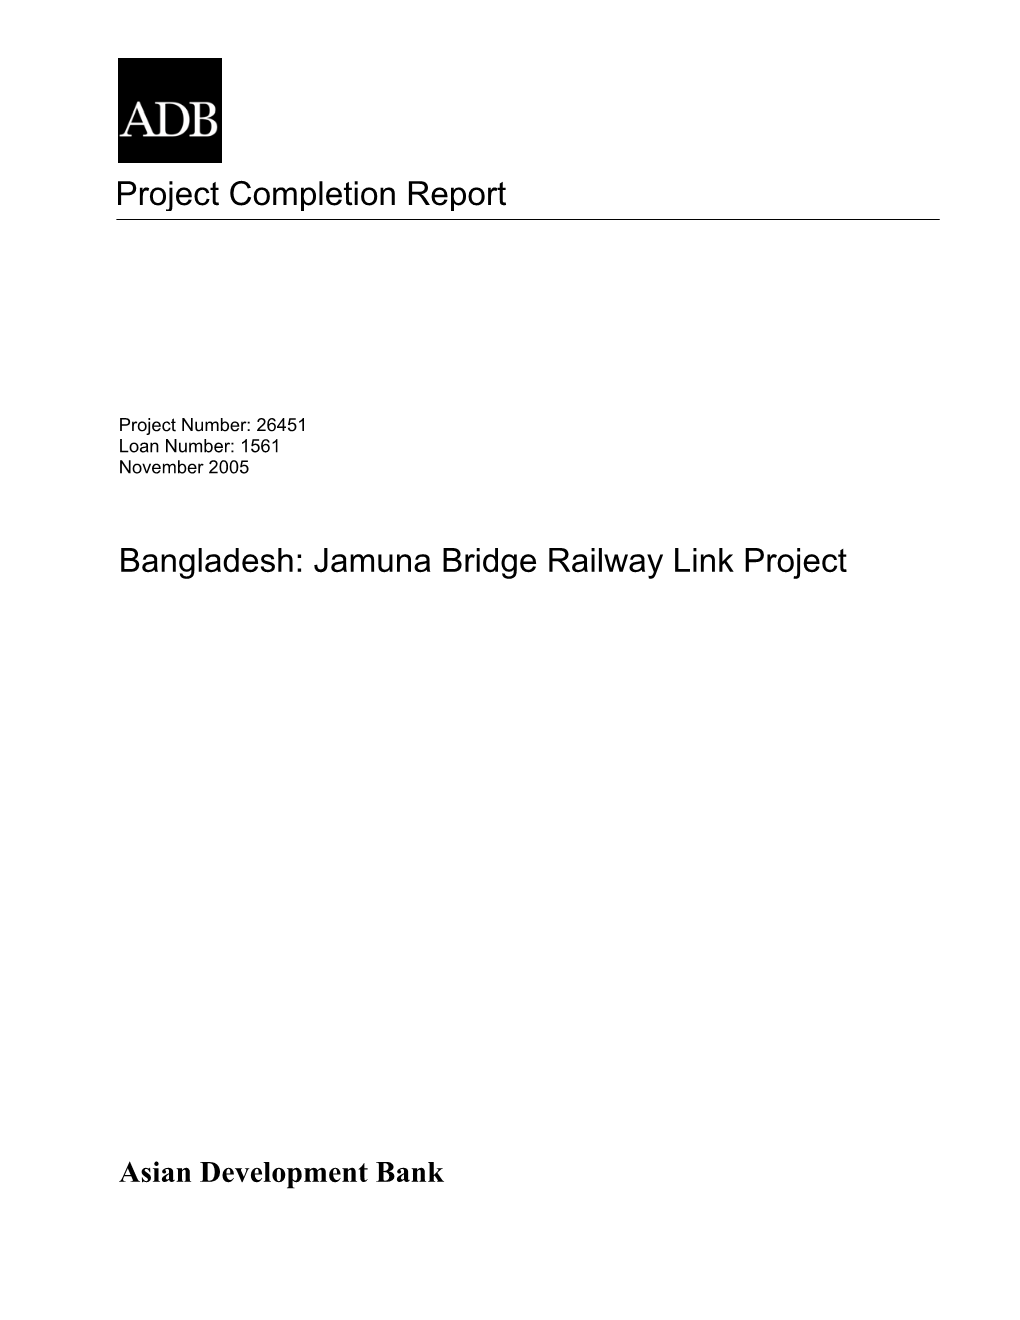 Bangladesh: Jamuna Bridge Railway Link Project